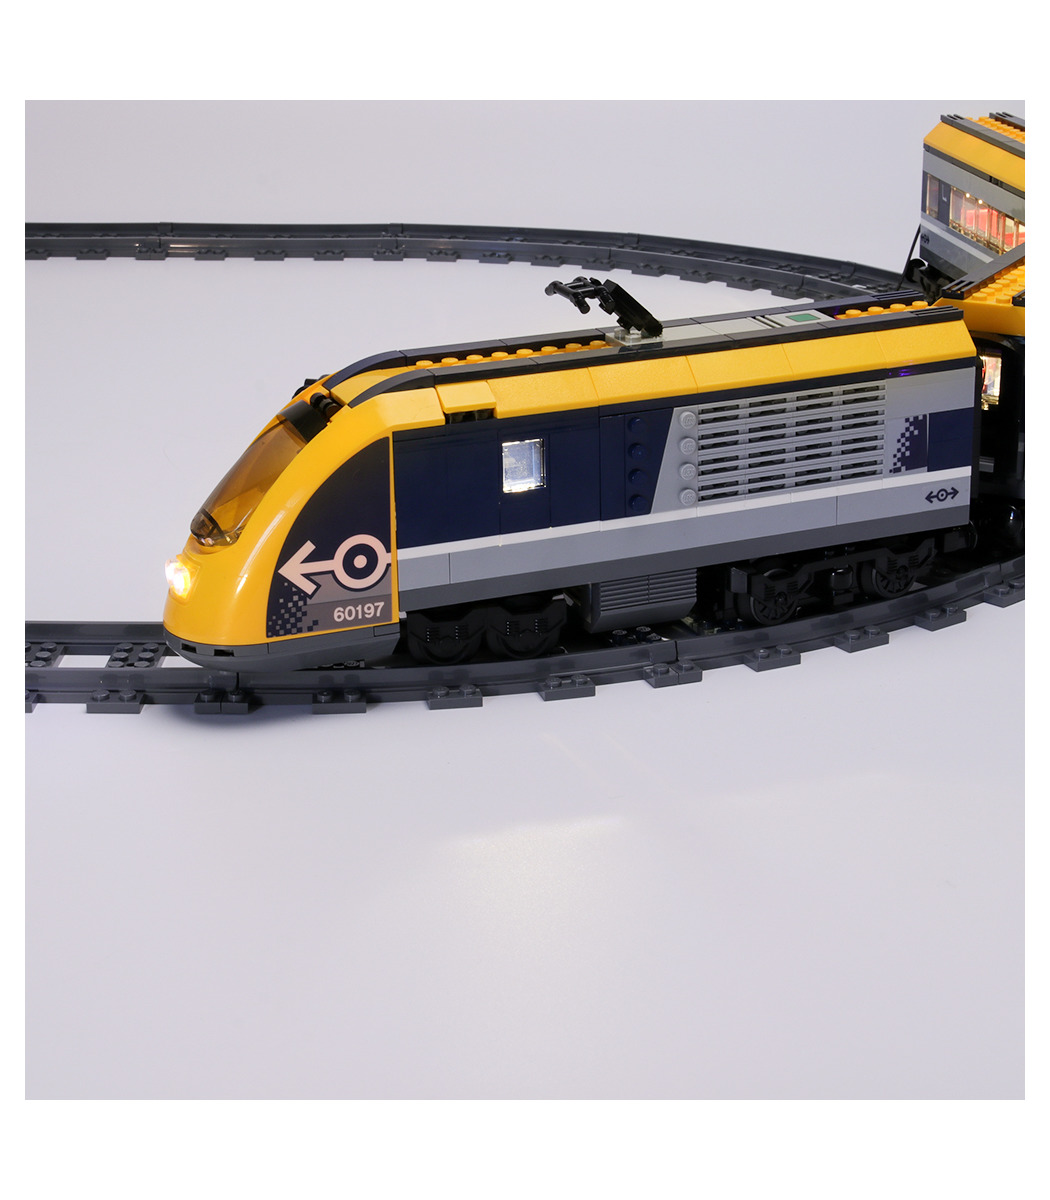 DEL Light Up Kit For 60197 ville série train voyageurs Set-version standard Kit 